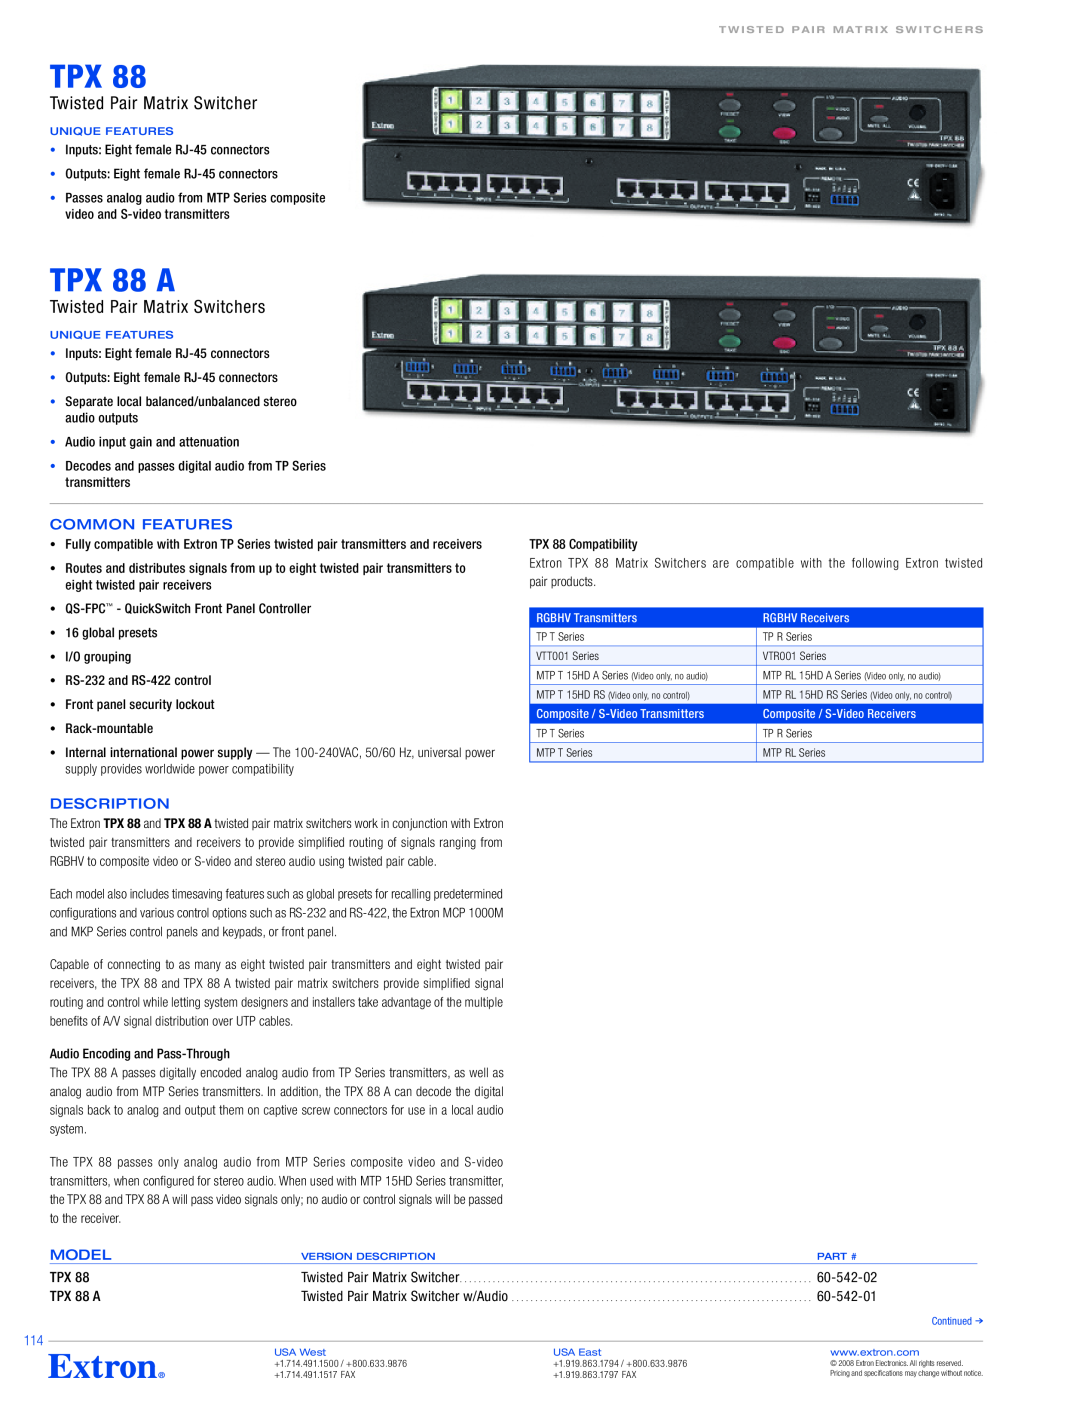 Extron electronic TPX 88 A specifications Common Features, Description, Model, 60-542-02, 60-542-01 